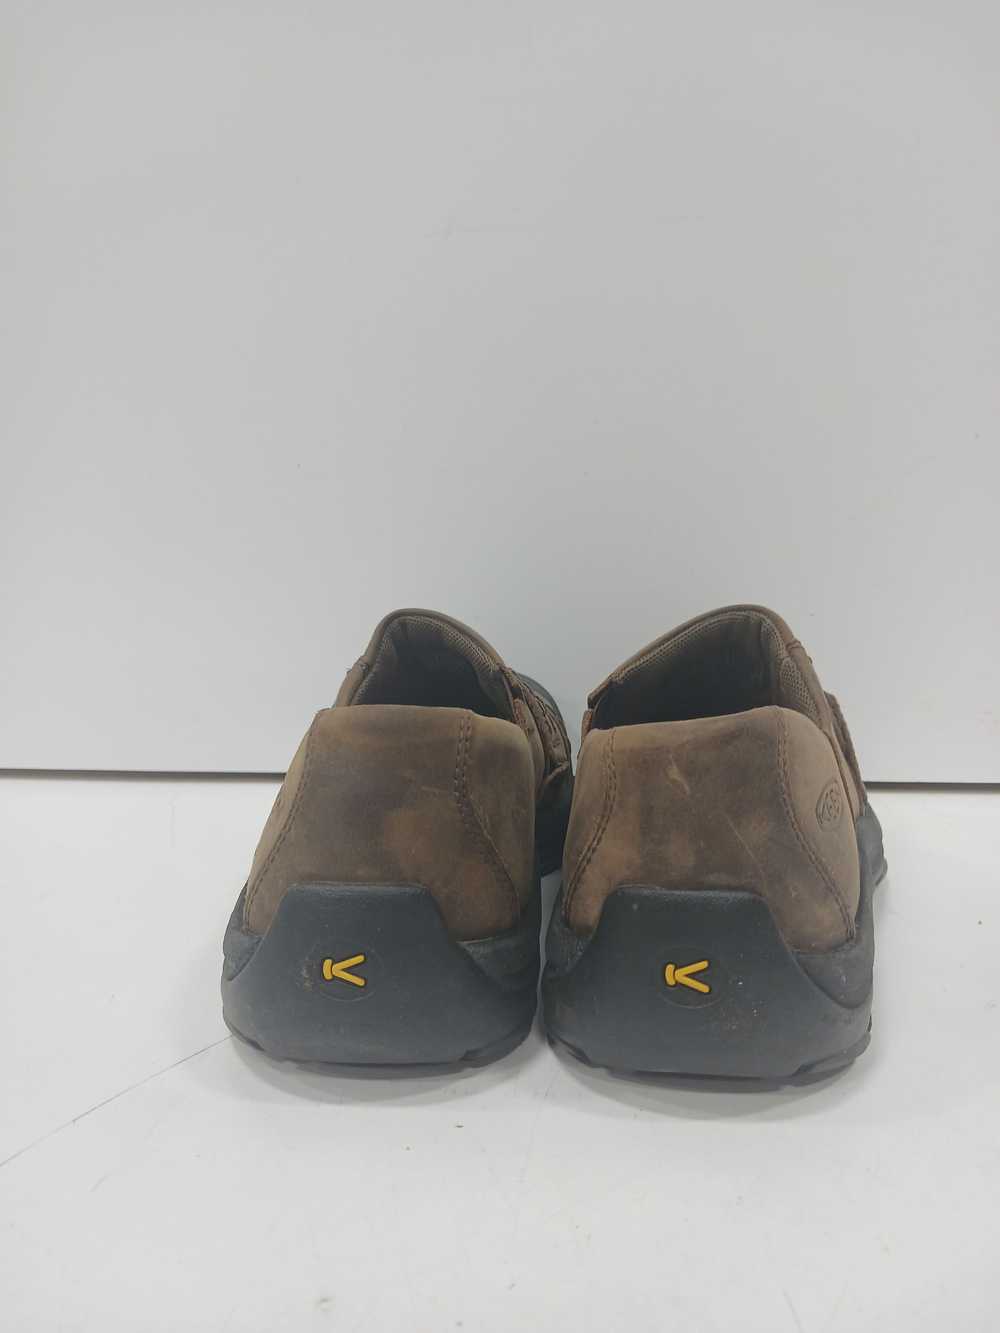 Keen 'Kaci' Brown Slip On Shoes Women's Size 7 - image 3